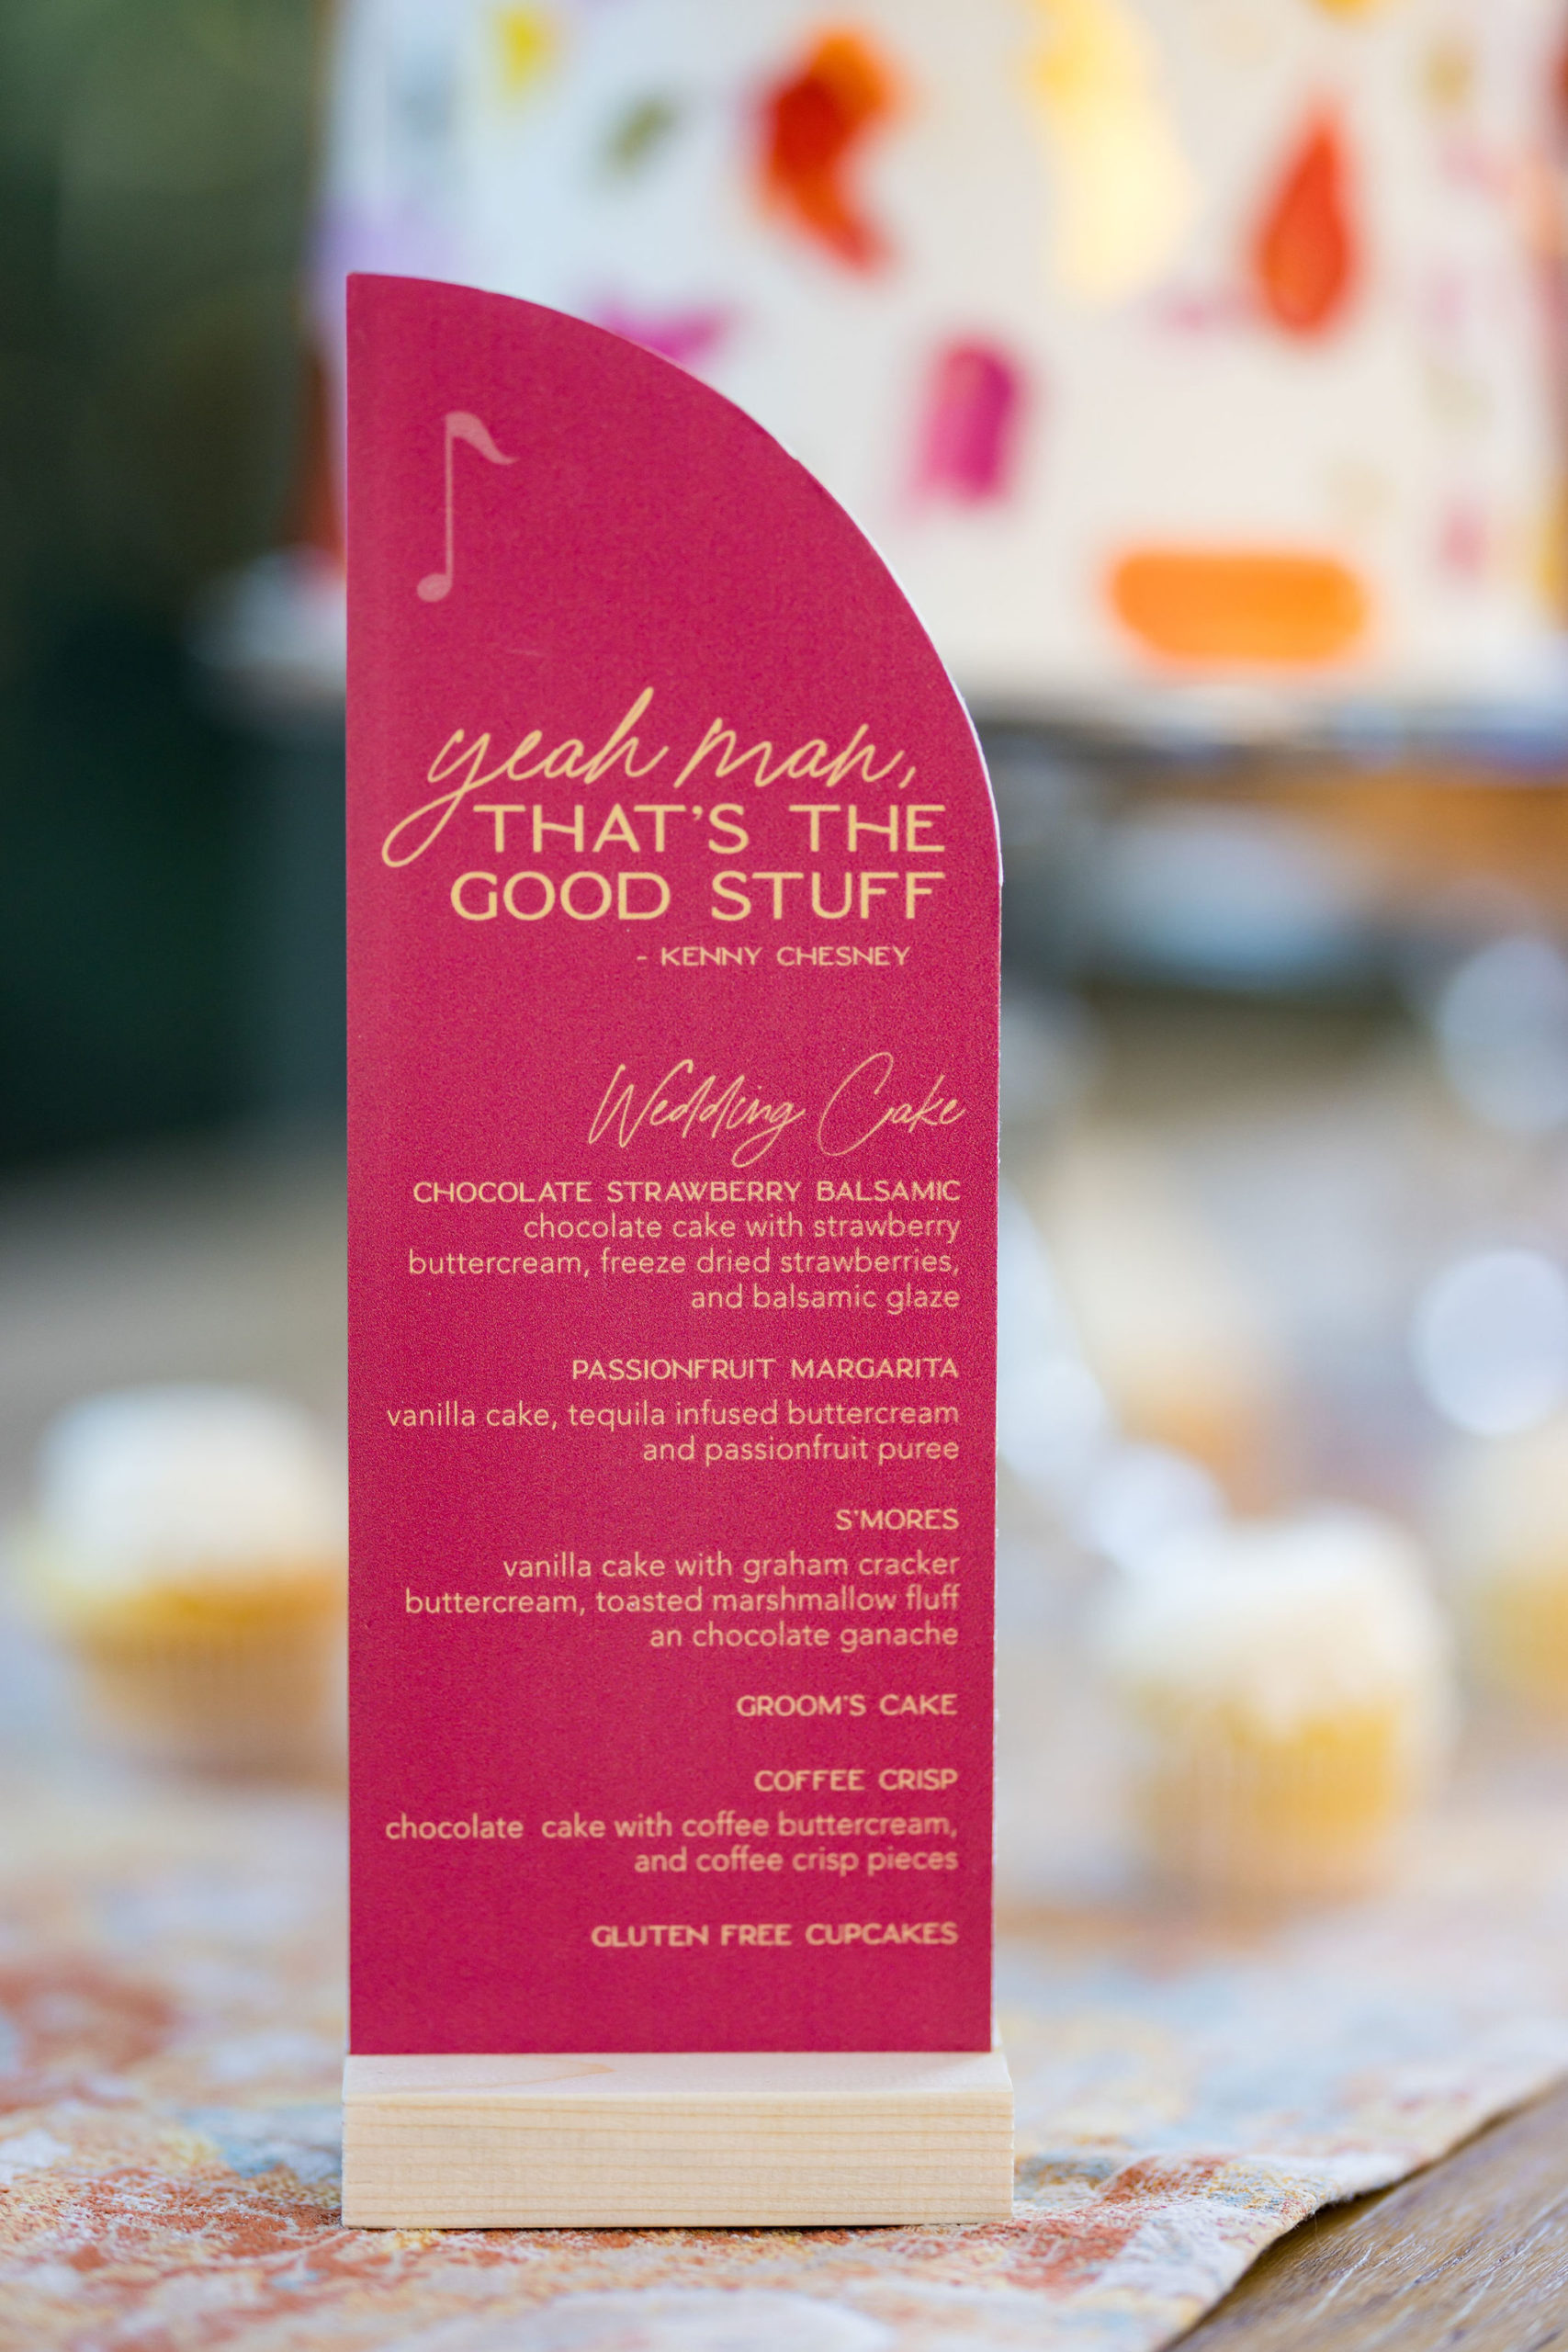 bright pink dessert menu with country music lyrics